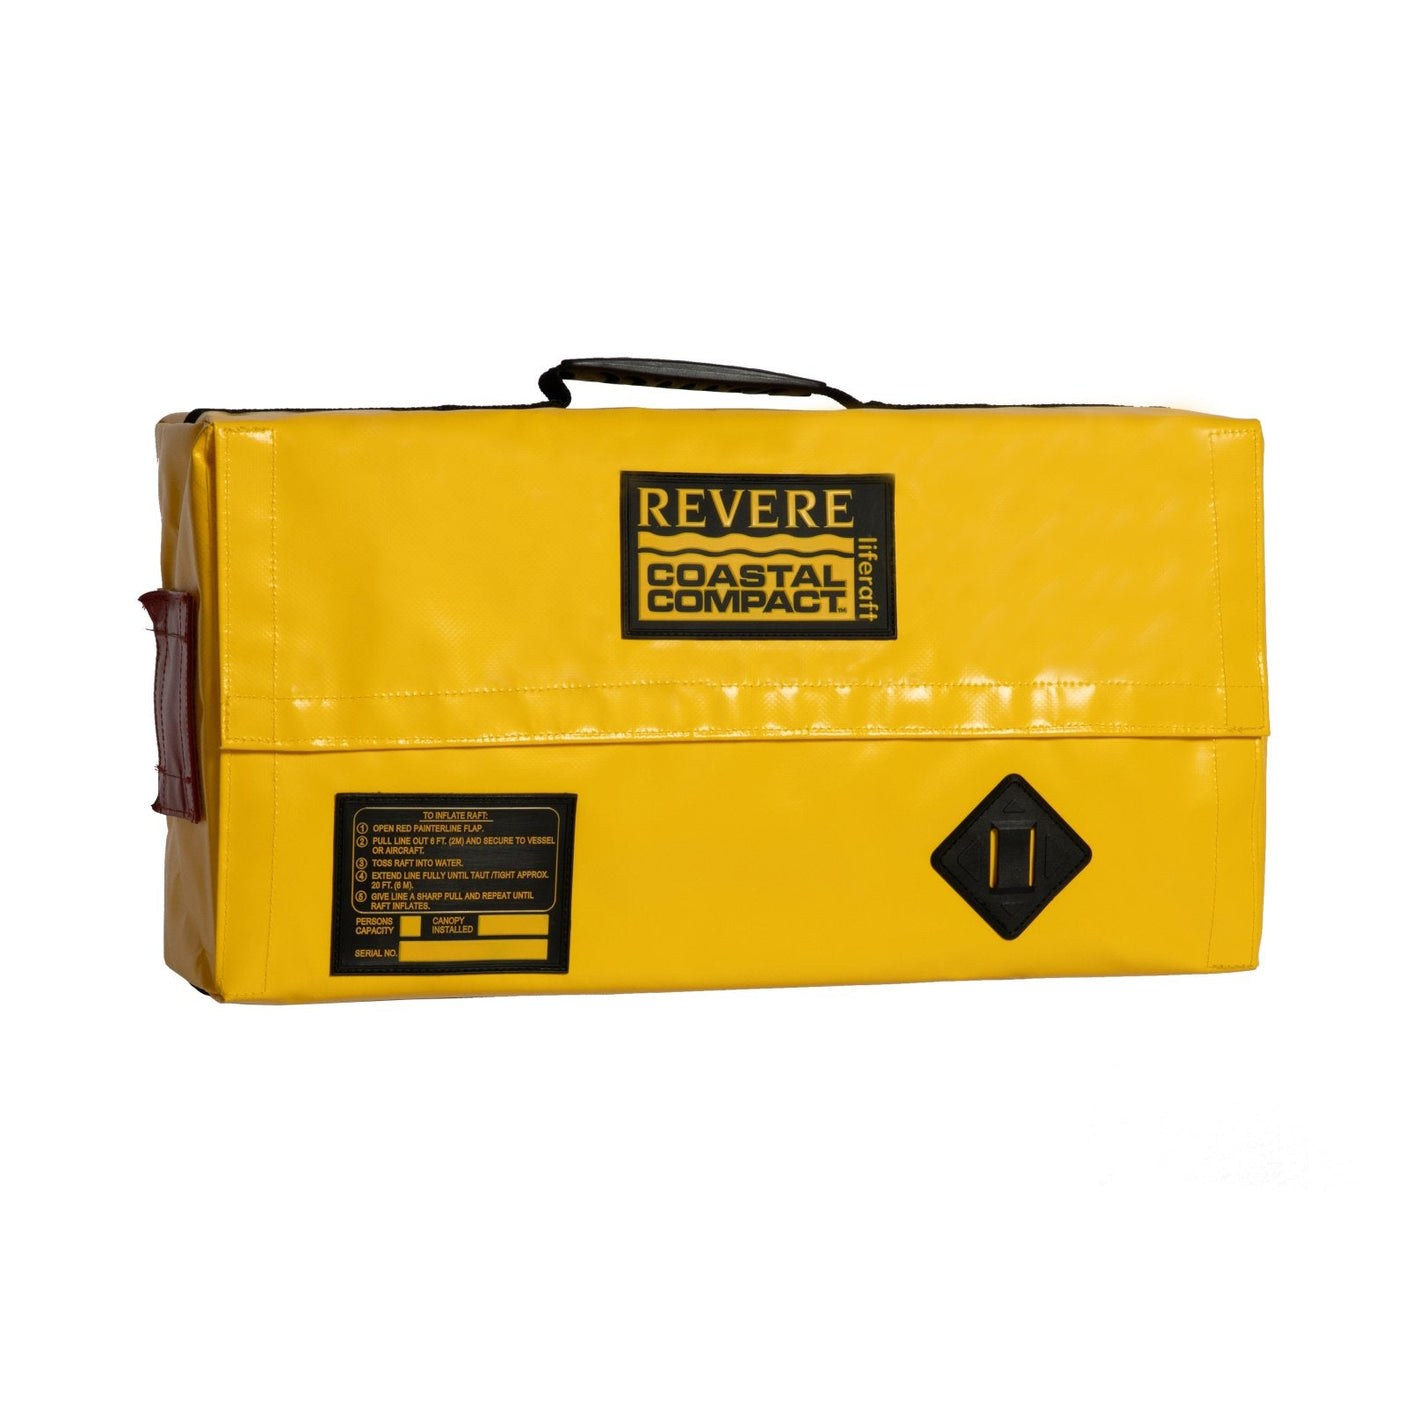 Revere Coastal Compact Life Raft, 2-6 Person, Valise Bag - Life Raft Professionals